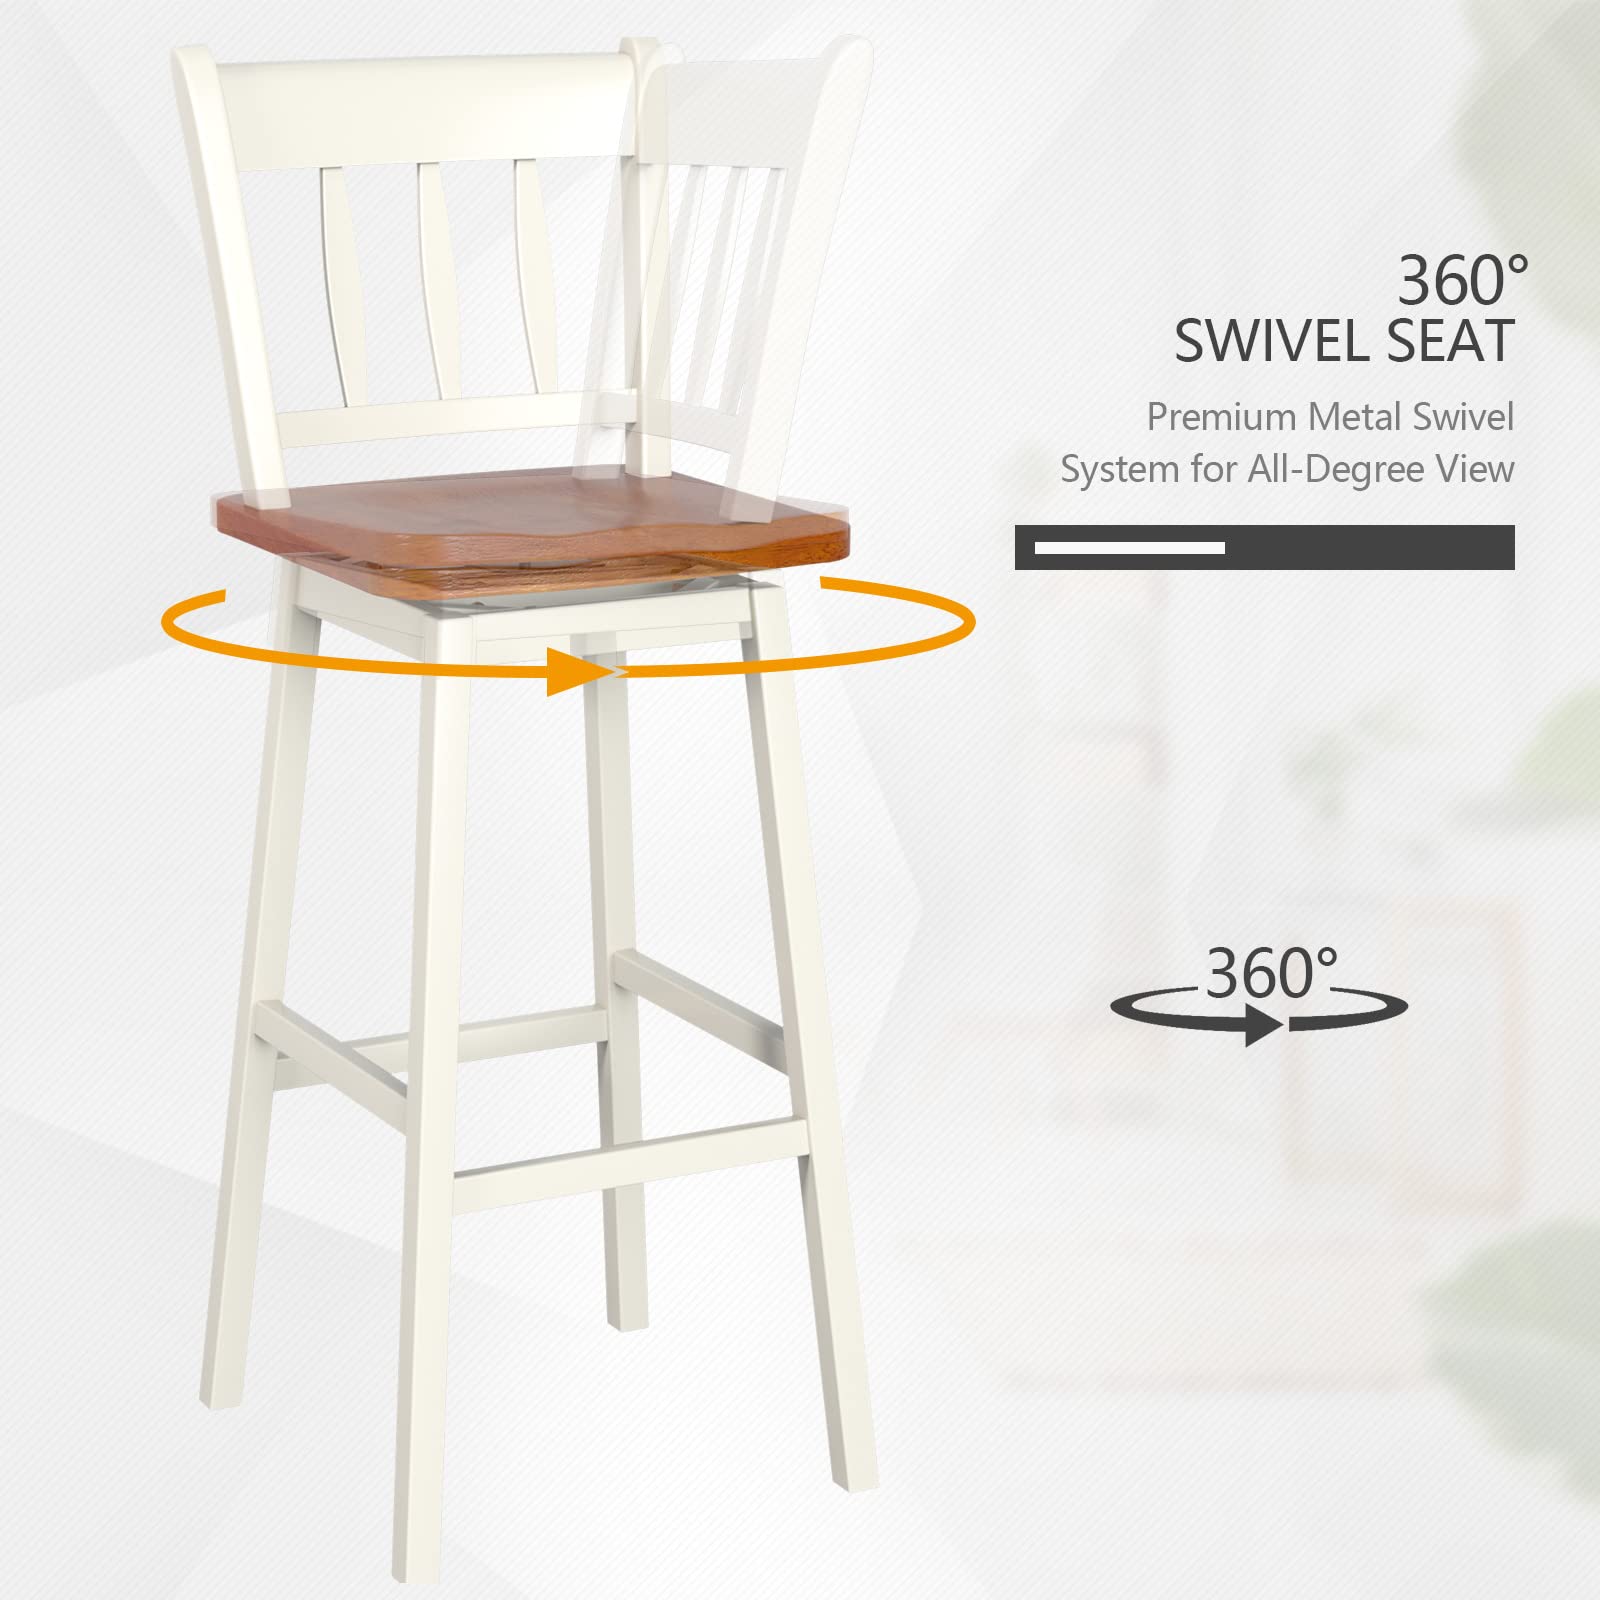 30.5 Inch Rubber Wood Bar Chairs - Giantex